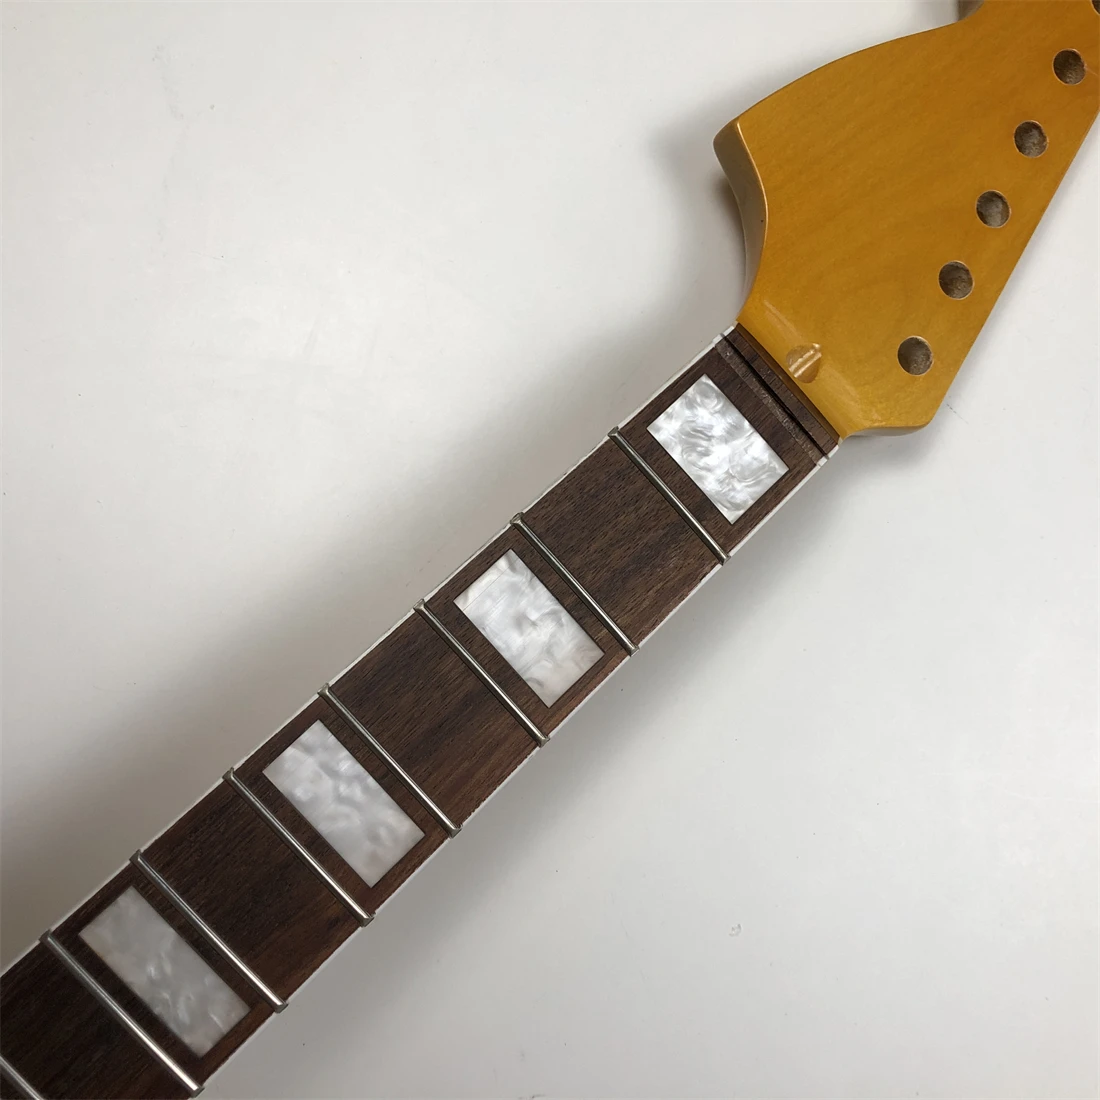 Reverse Big Head Electric Guitar Neck 22 Fret 24 inch Maple Rosewood Fretboard Block inlay Gloss